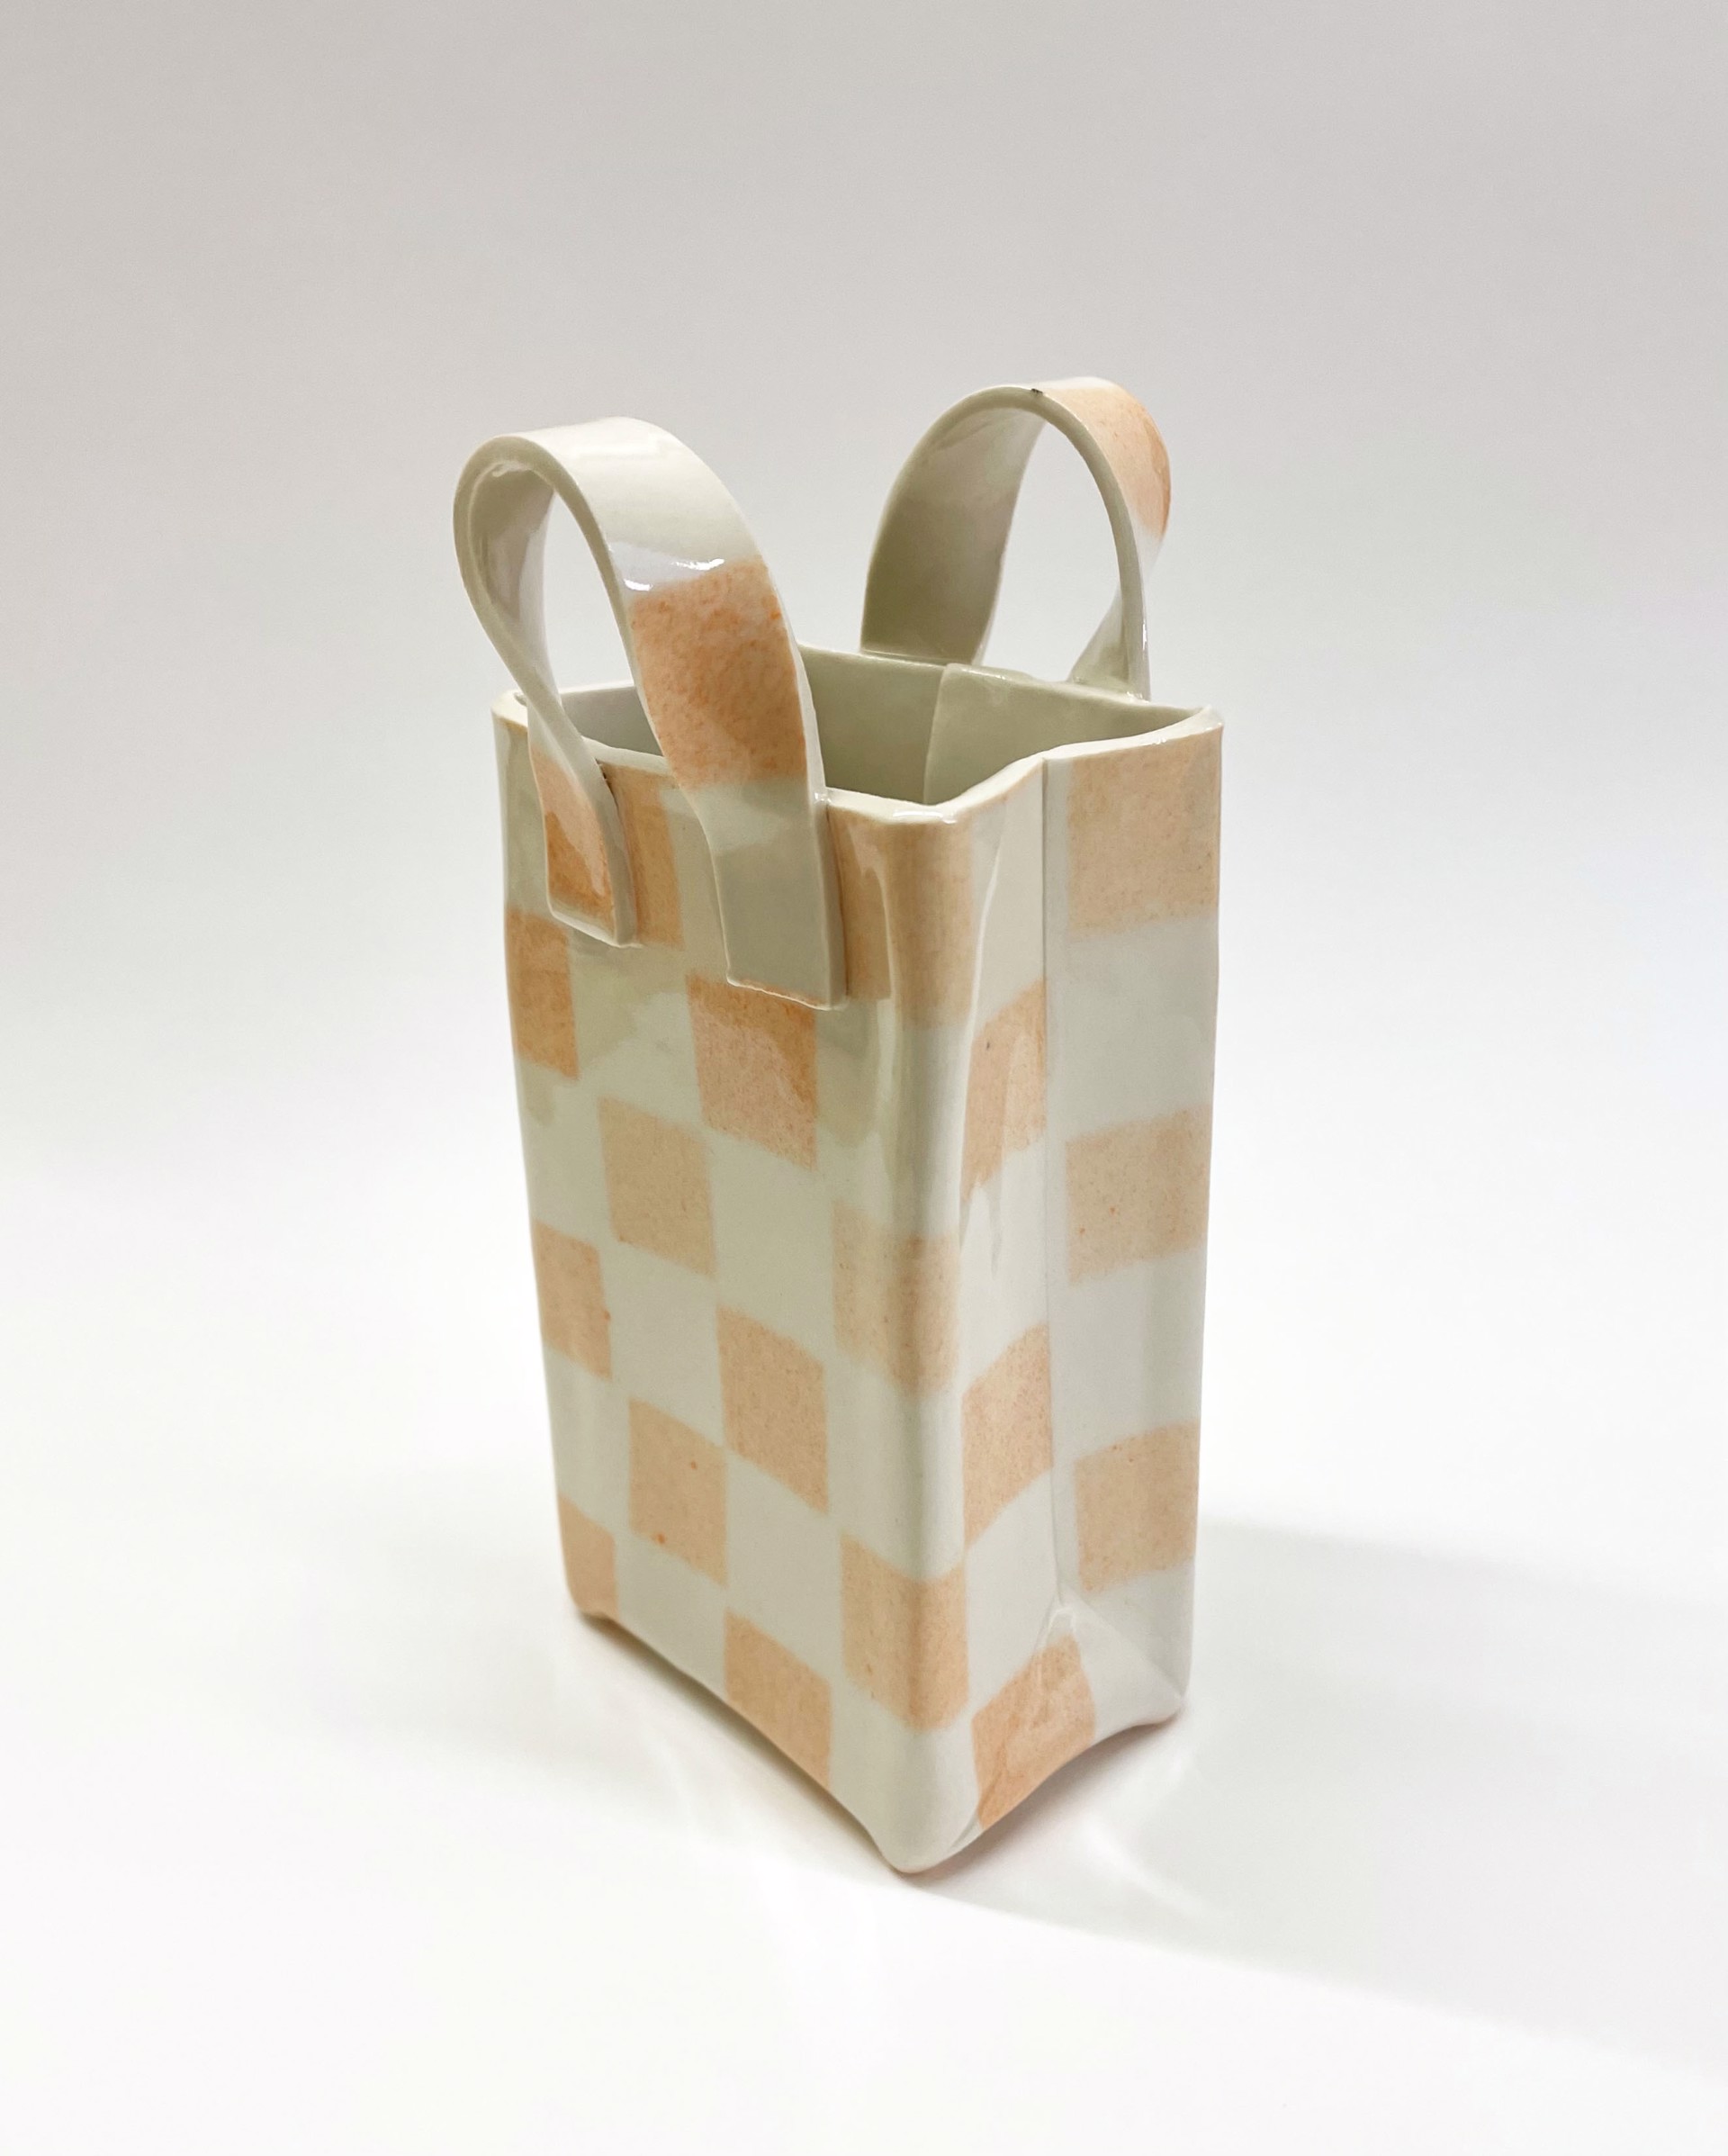 Checkered Bag by Chandra Beadleston